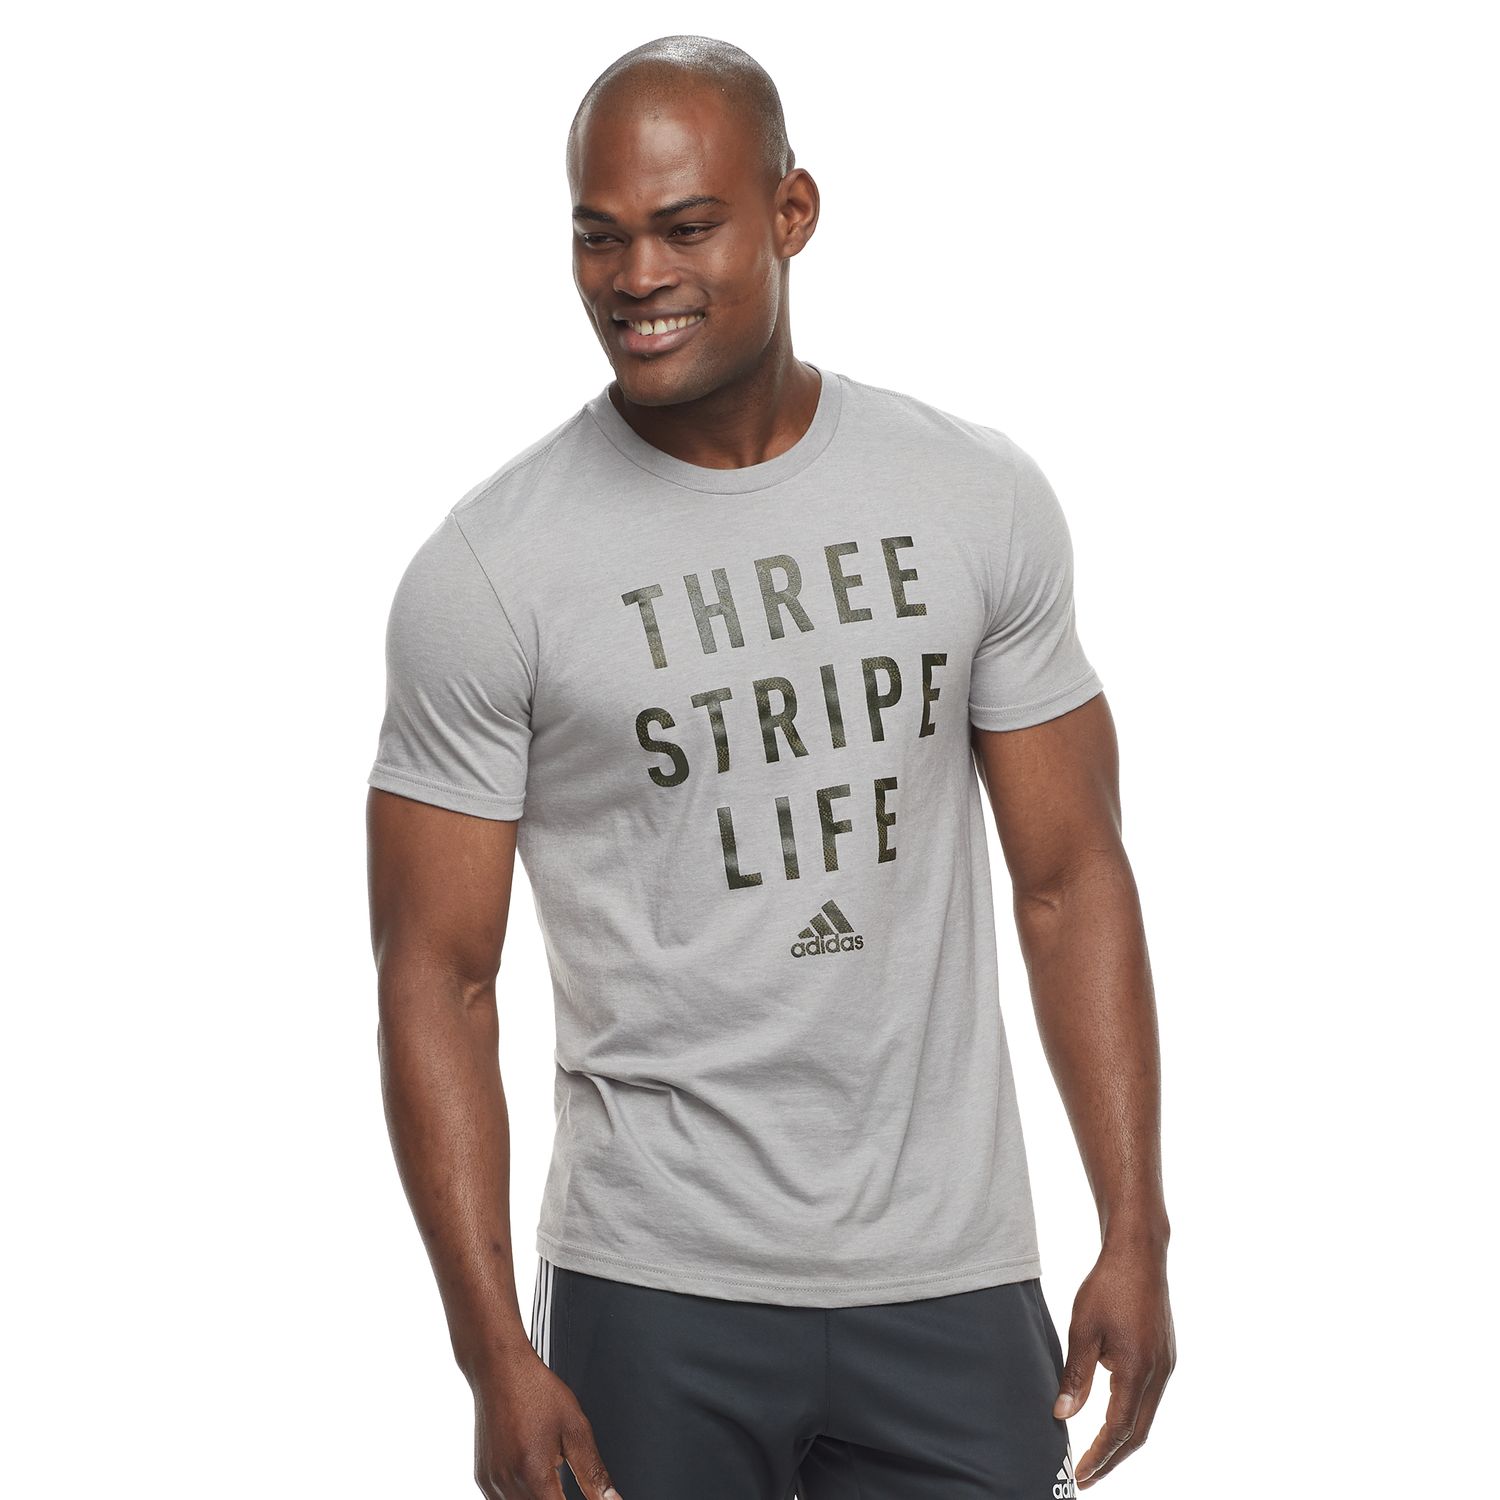 the three stripe life